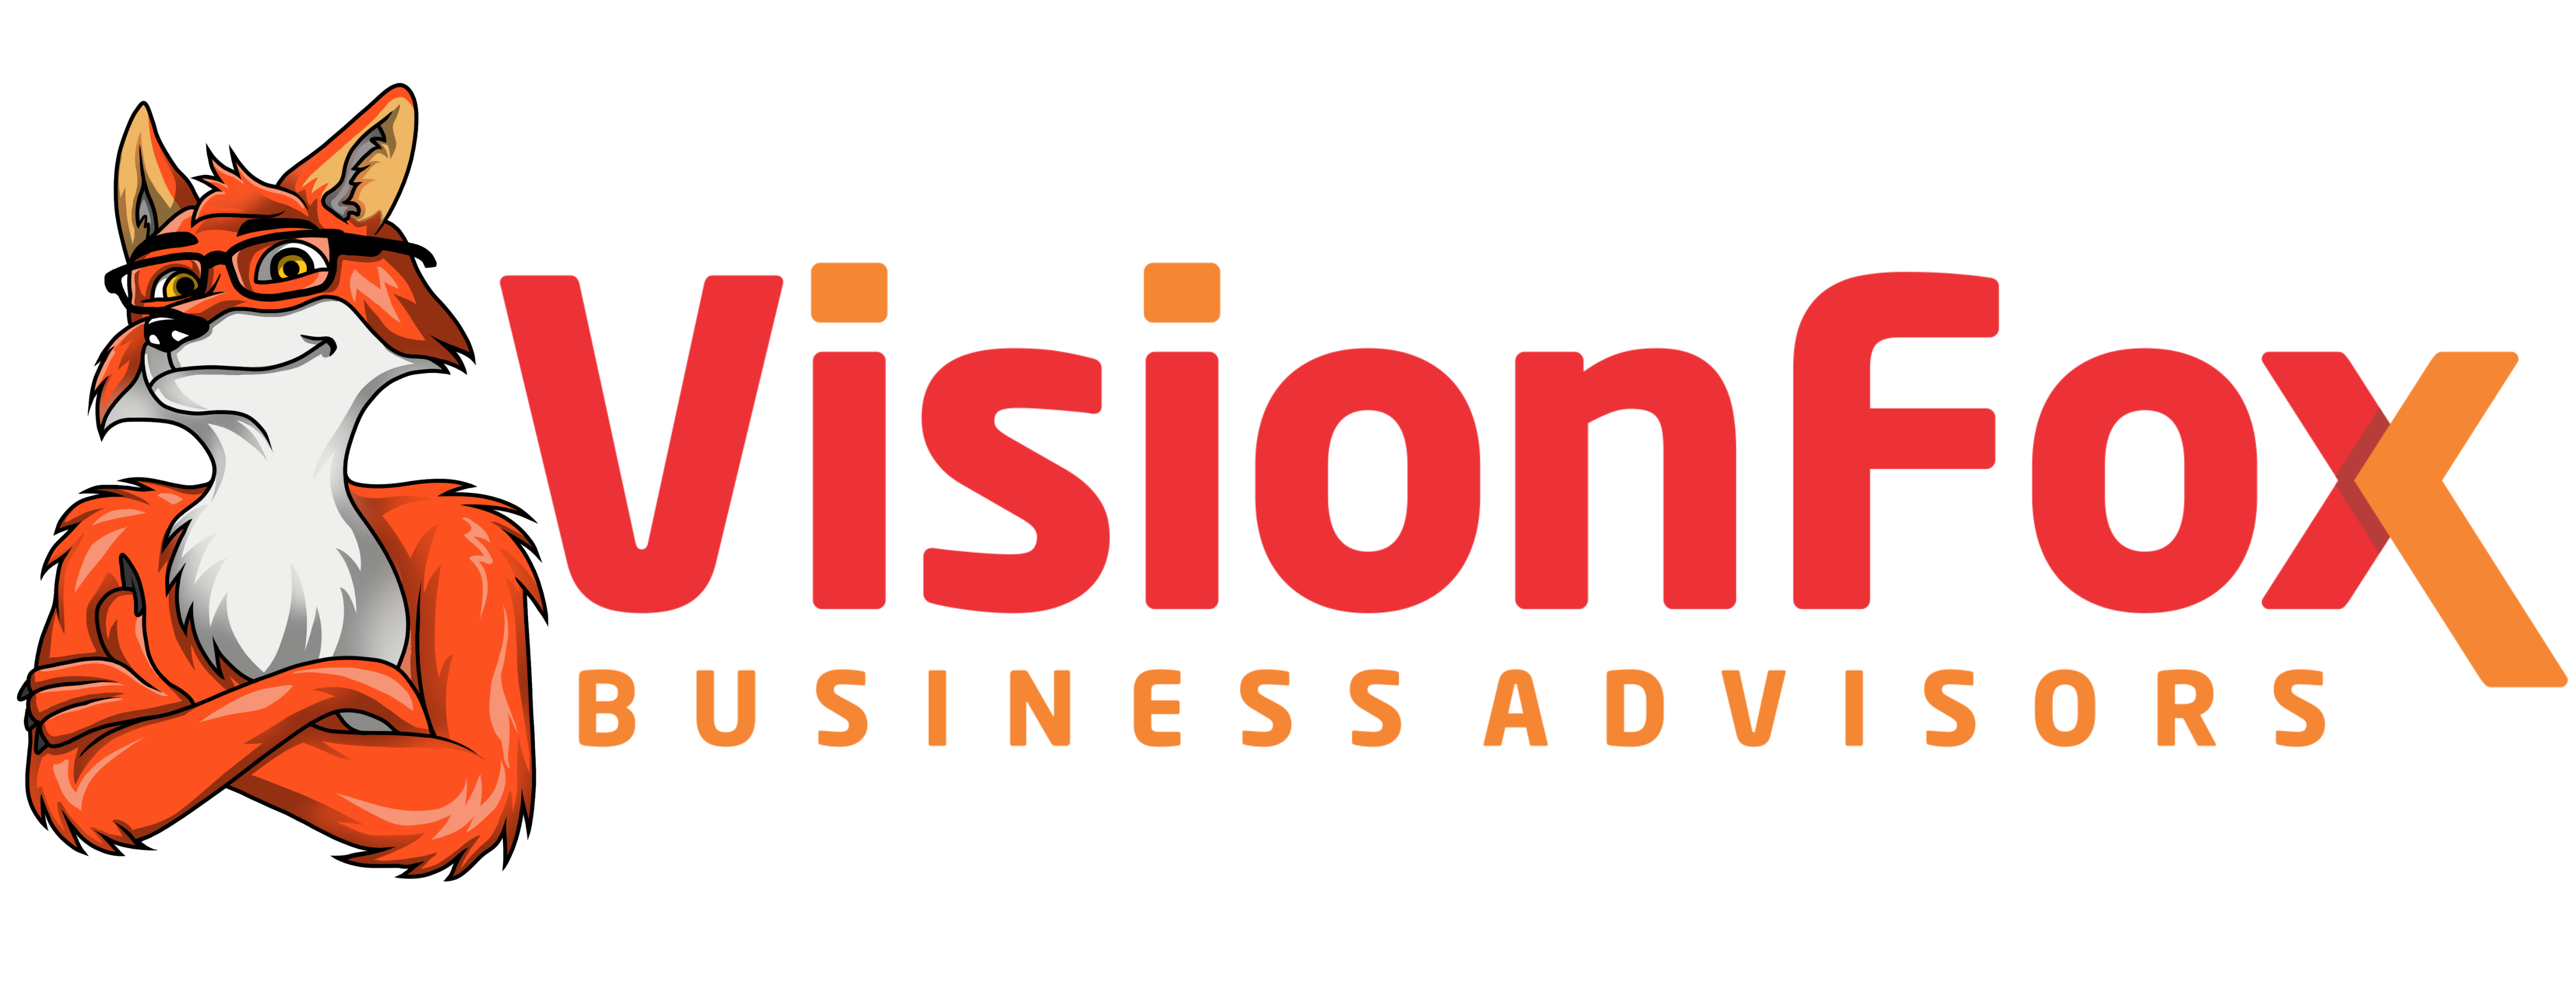 Amanda Kimsey named Director of Operations at Vision Fox Business Advisors